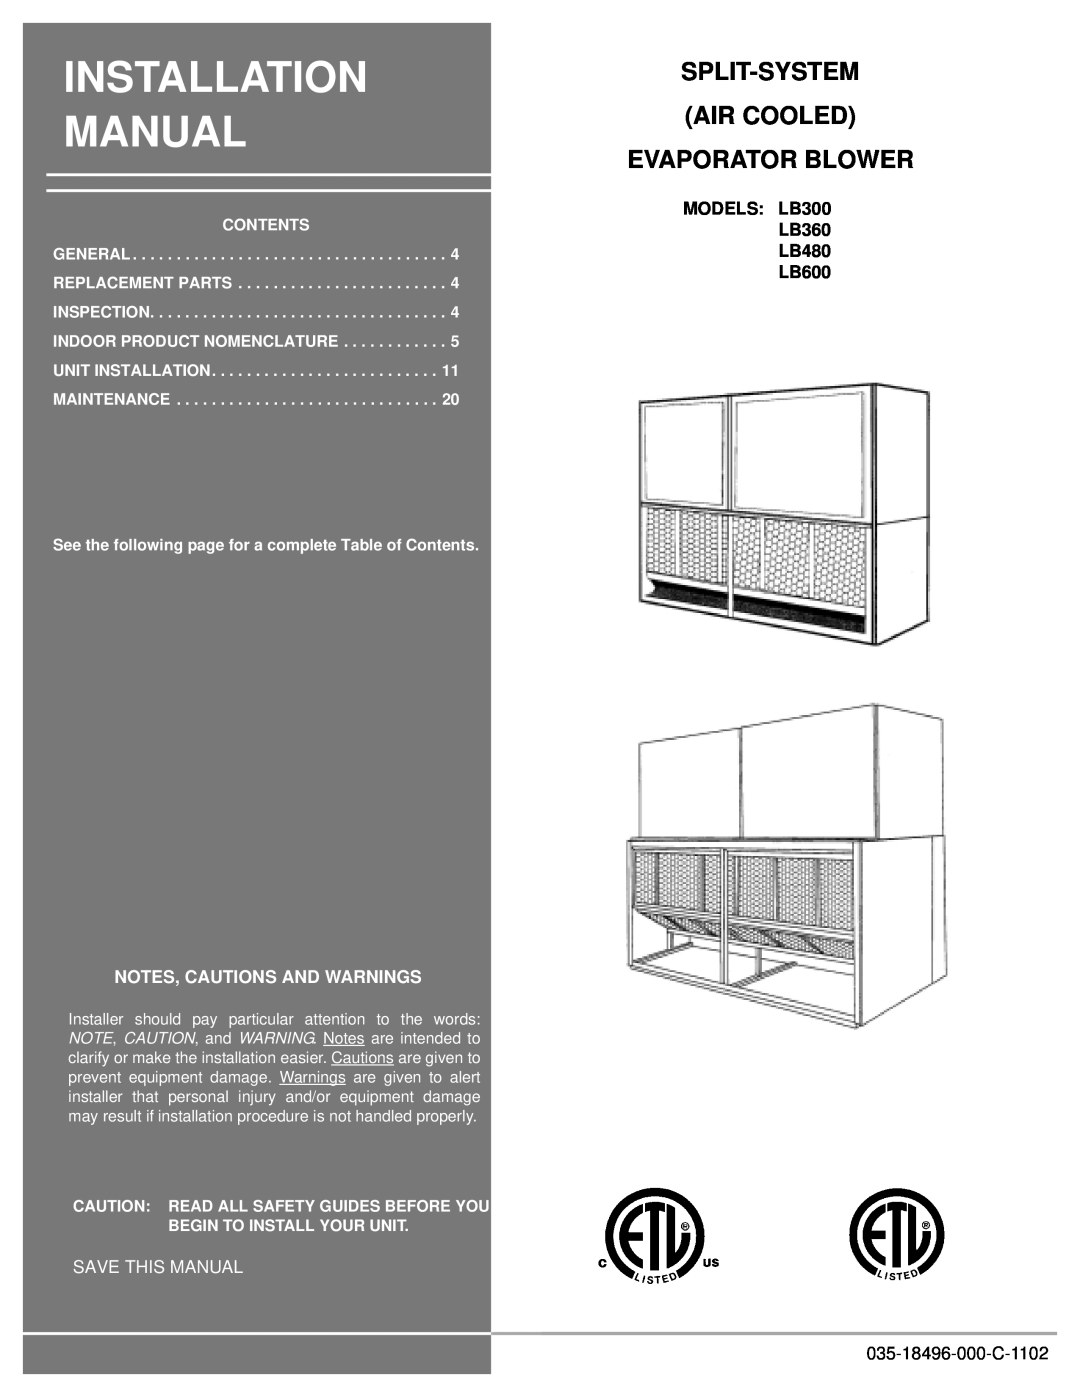 Energy Tech Laboratories LB360, LB480 installation manual Split-System Air Cooled Evaporator Blower, Installation Manual 